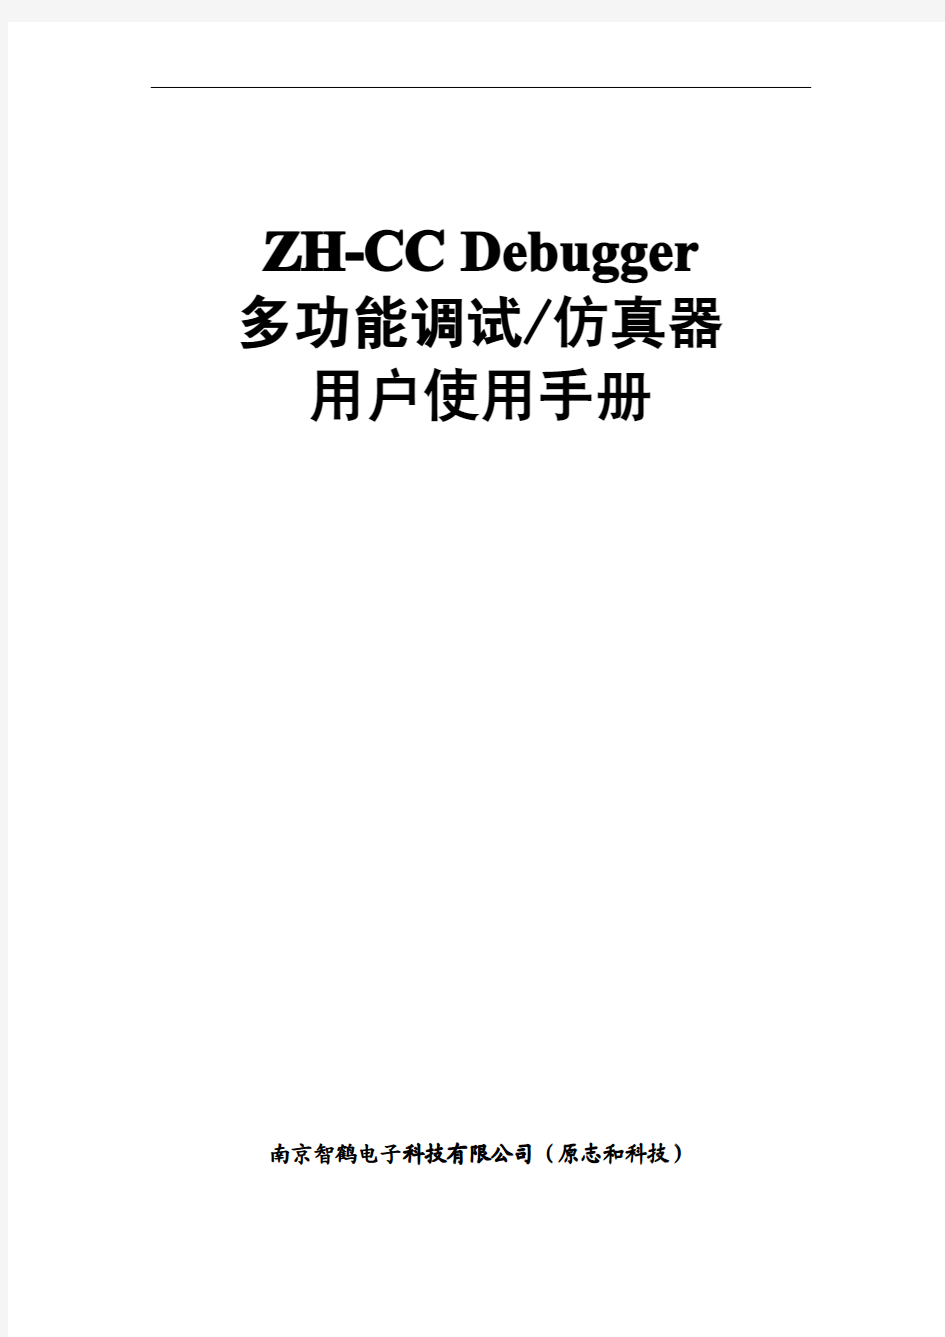 ZH-CC Debugger多功能调试仿真器使用手册